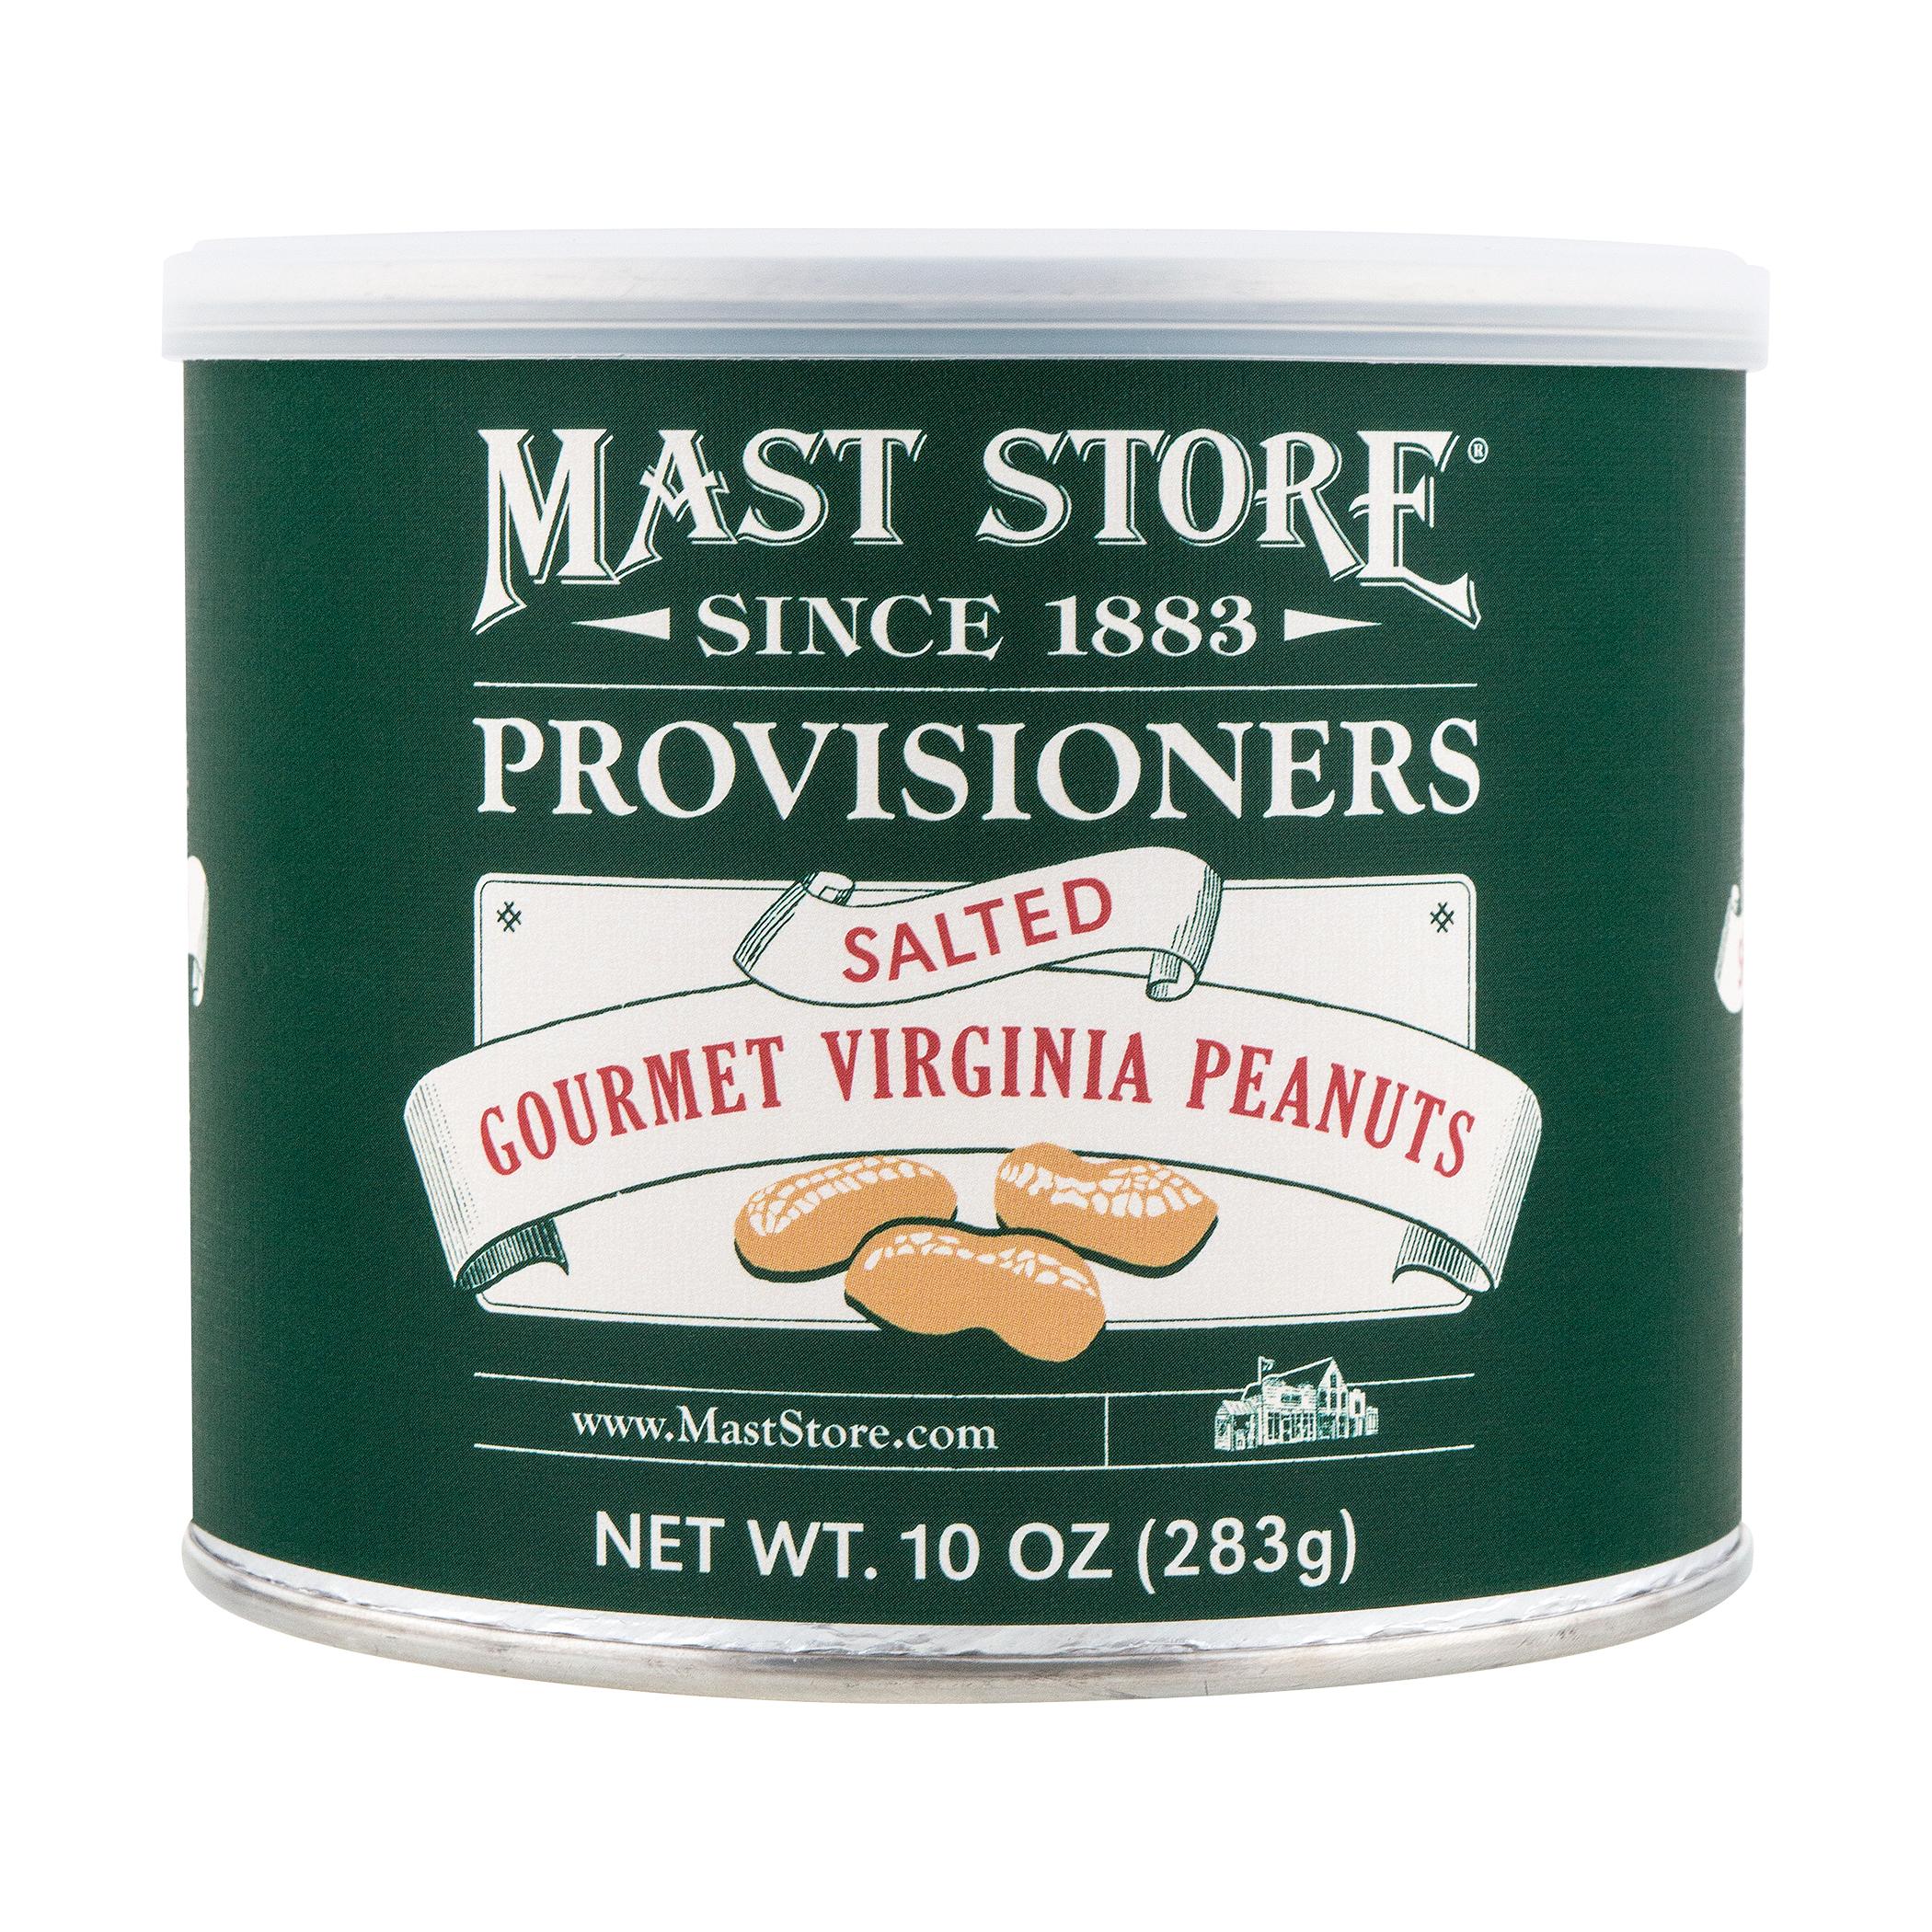  Mast Store Provisioners Salted Gourmet Virginia Peanuts